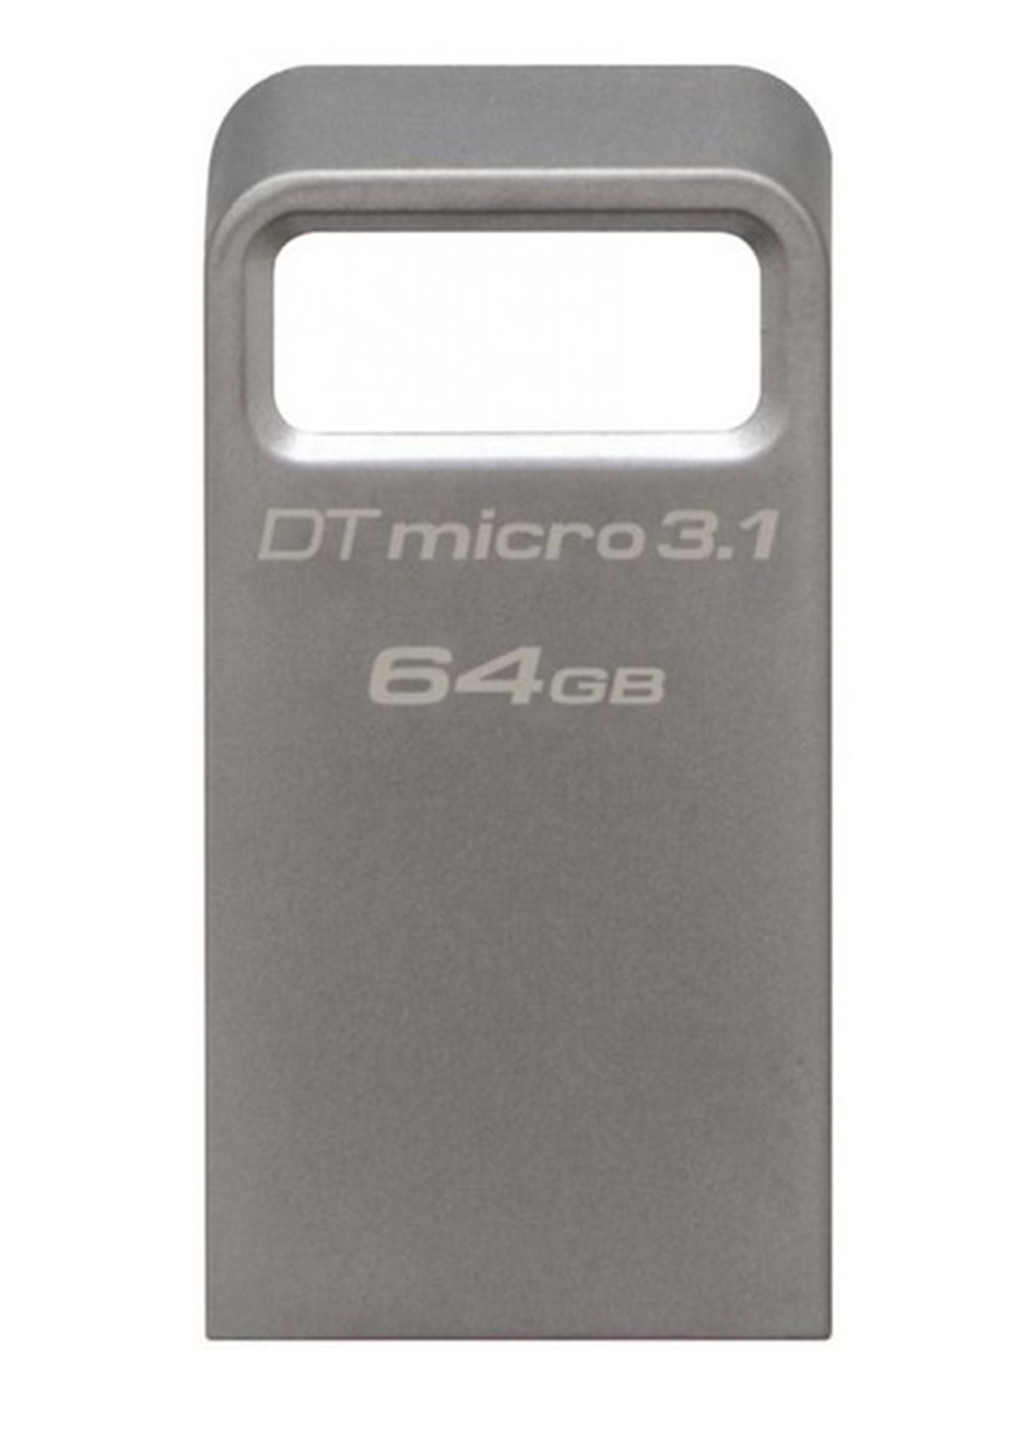 Флеш память USB DataTraveler Micro 3.1 64GB Metal Silver USB 3.1 (DTMC3/64GB) Kingston флеш память usb kingston datatraveler micro 3.1 64gb metal silver usb 3.1 (dtmc3/64gb) (135165474)